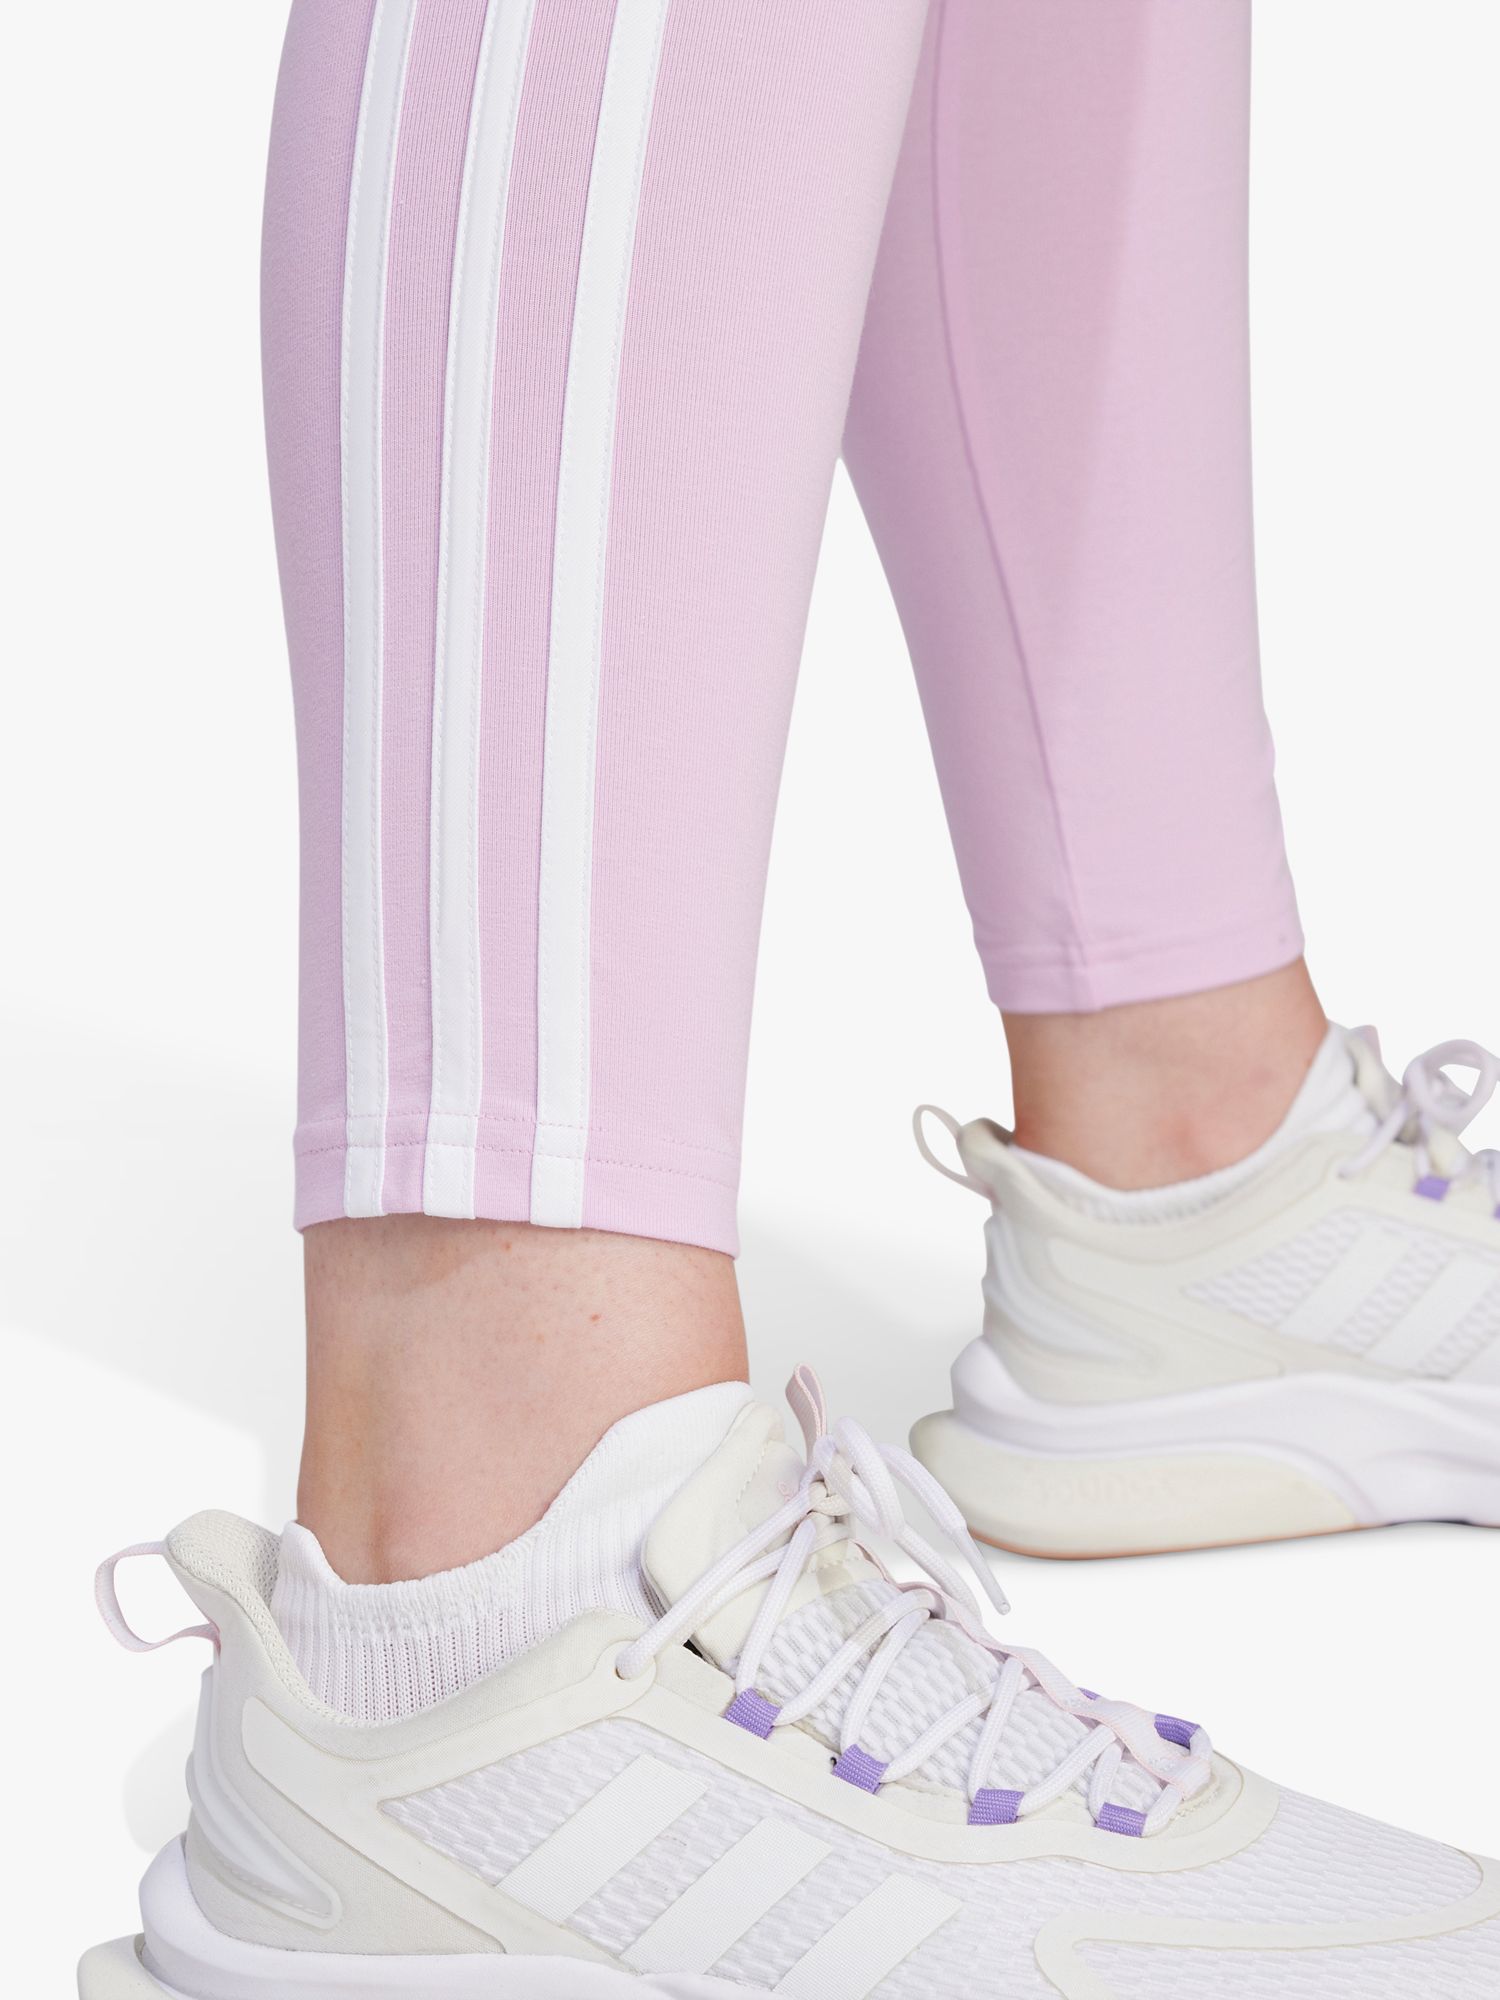 at Bliss & adidas Partners 3-Stripes Lilac/White High John Lewis Waist Leggings,